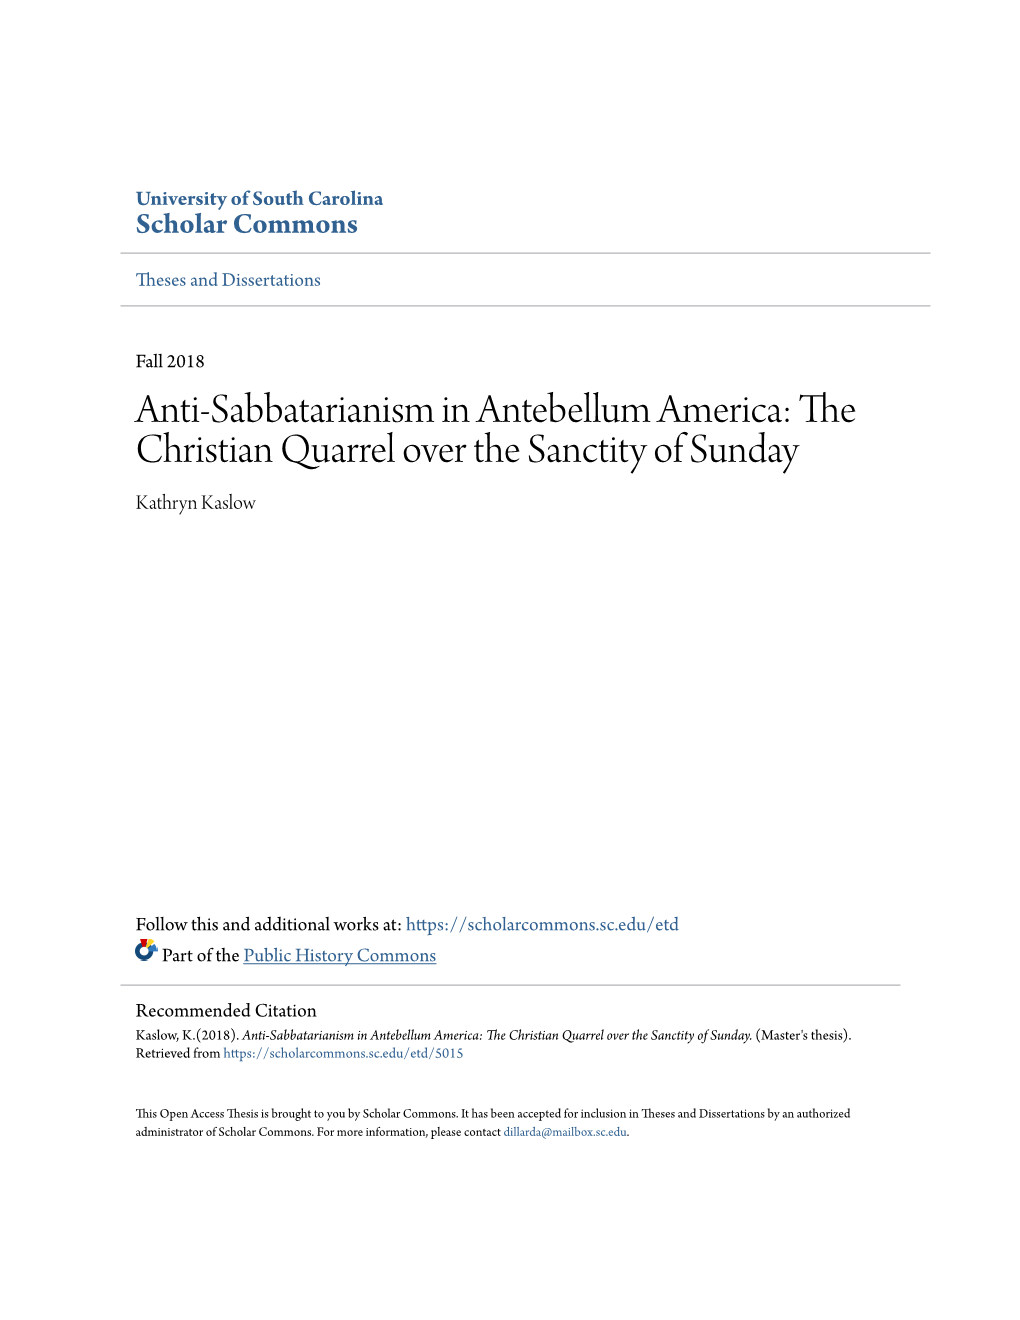 Anti-Sabbatarianism in Antebellum America: the Christian Quarrel Over the Sanctity of Sunday Kathryn Kaslow